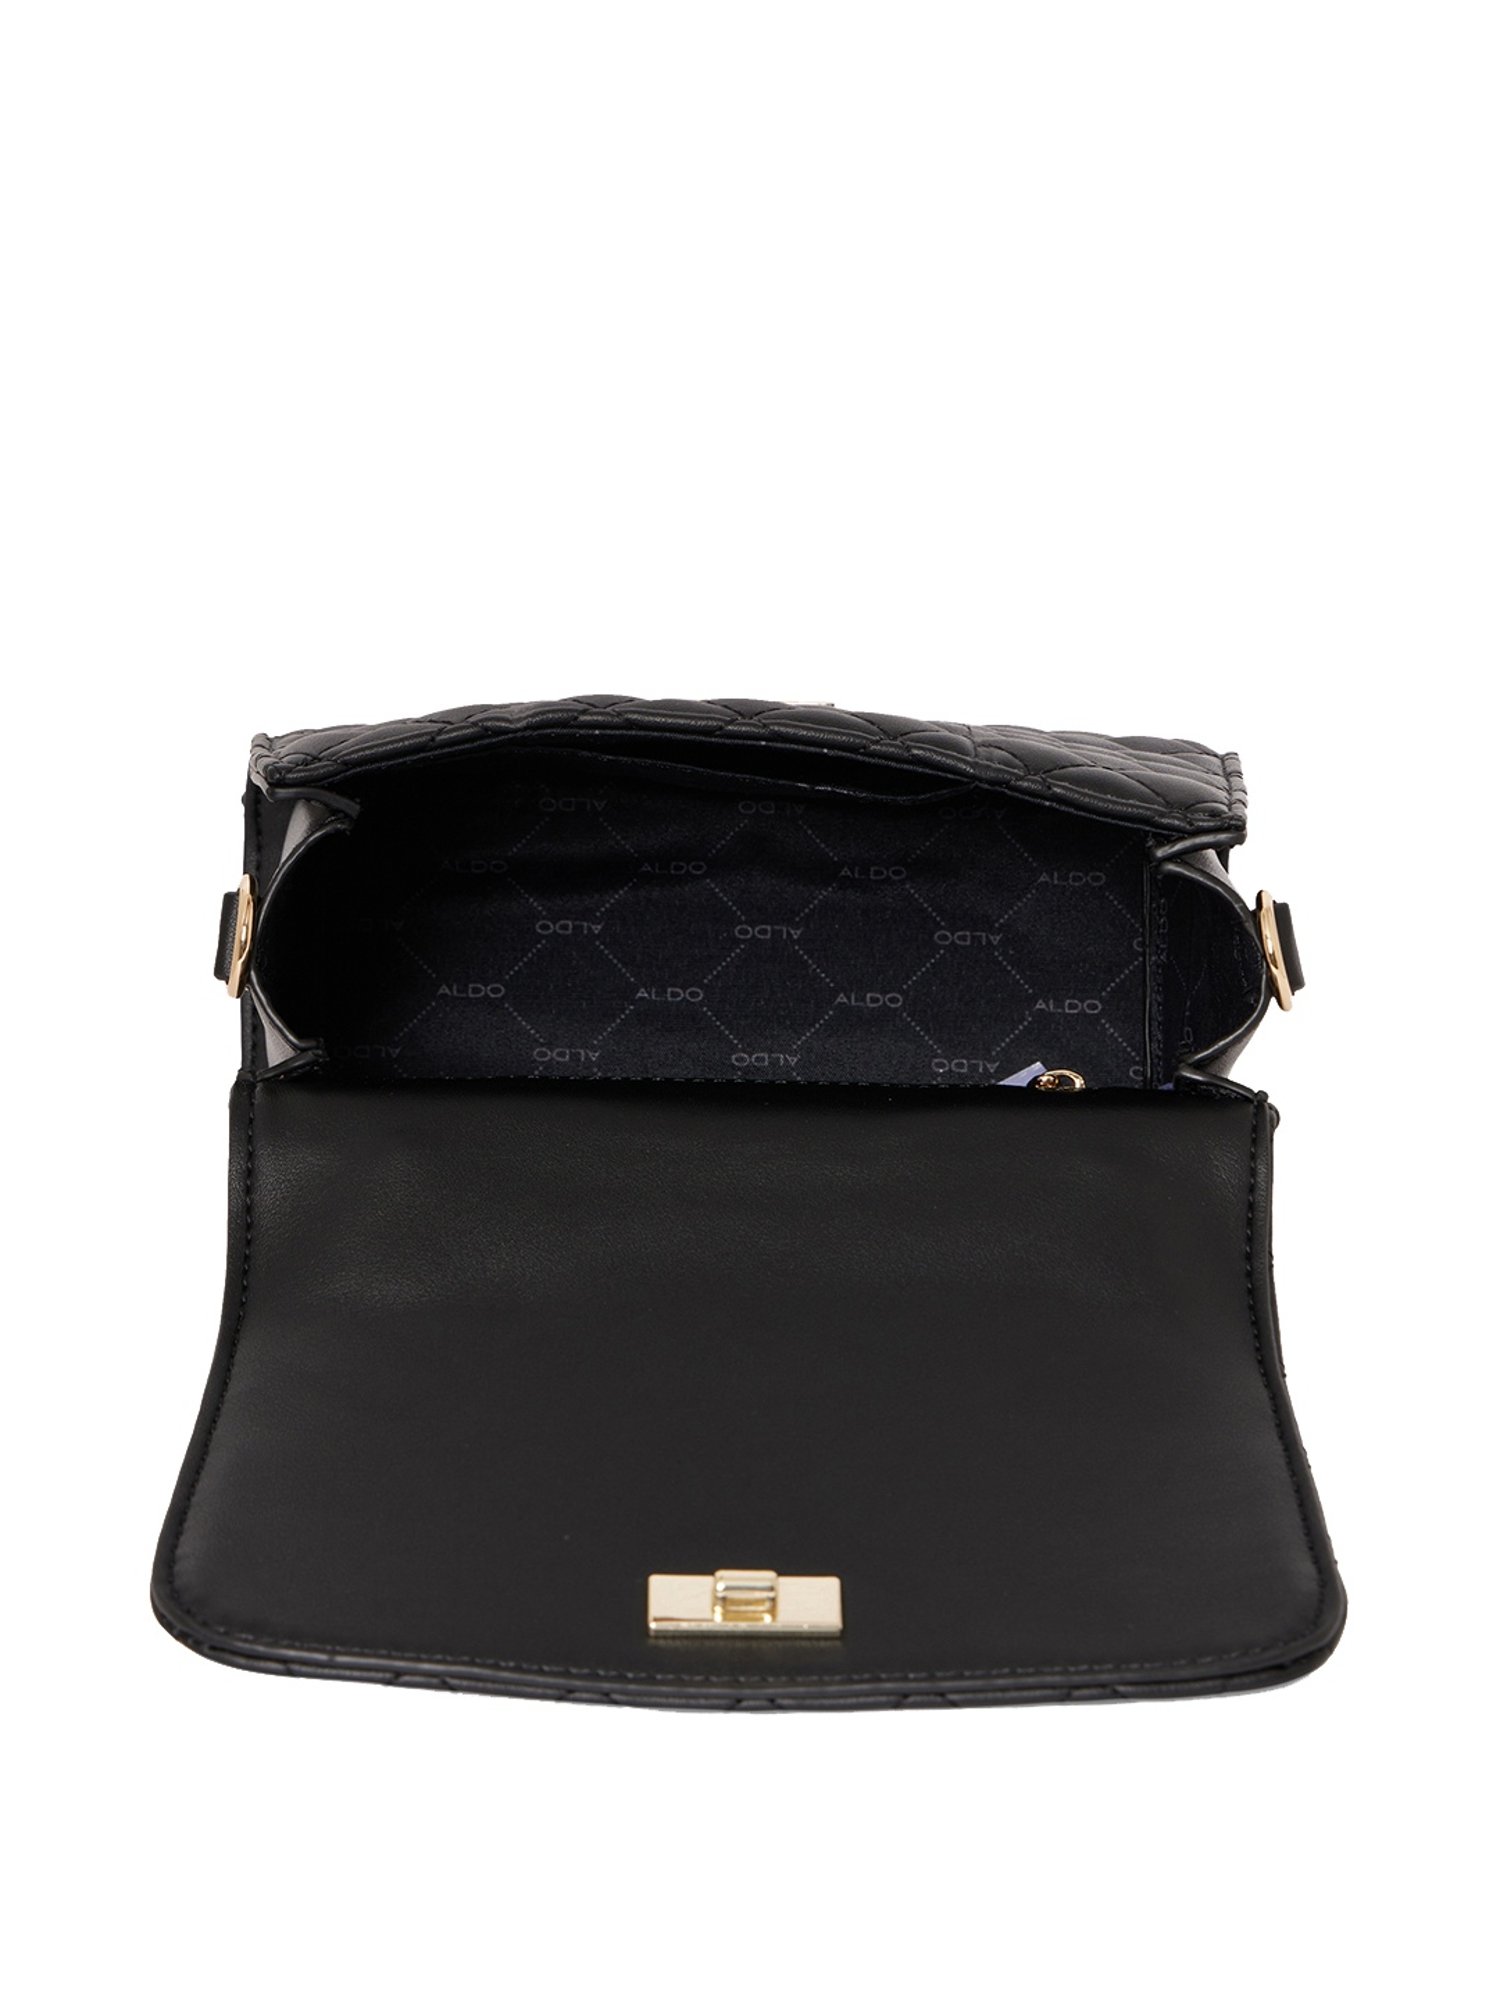 Buy ALDO Tweedia Women Handbags One Size (Black) Online - Best Price ALDO  Tweedia Women Handbags One Size (Black) - Justdial Shop Online.